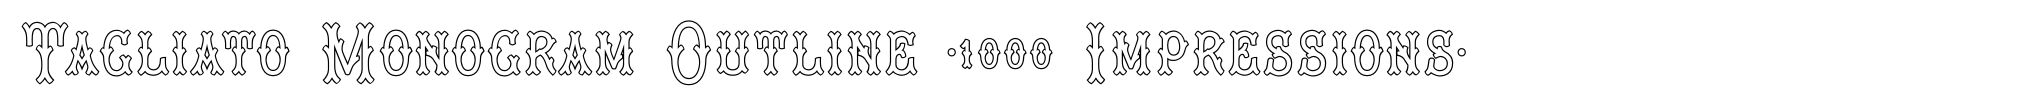 Tagliato Monogram Outline (1000 Impressions) image